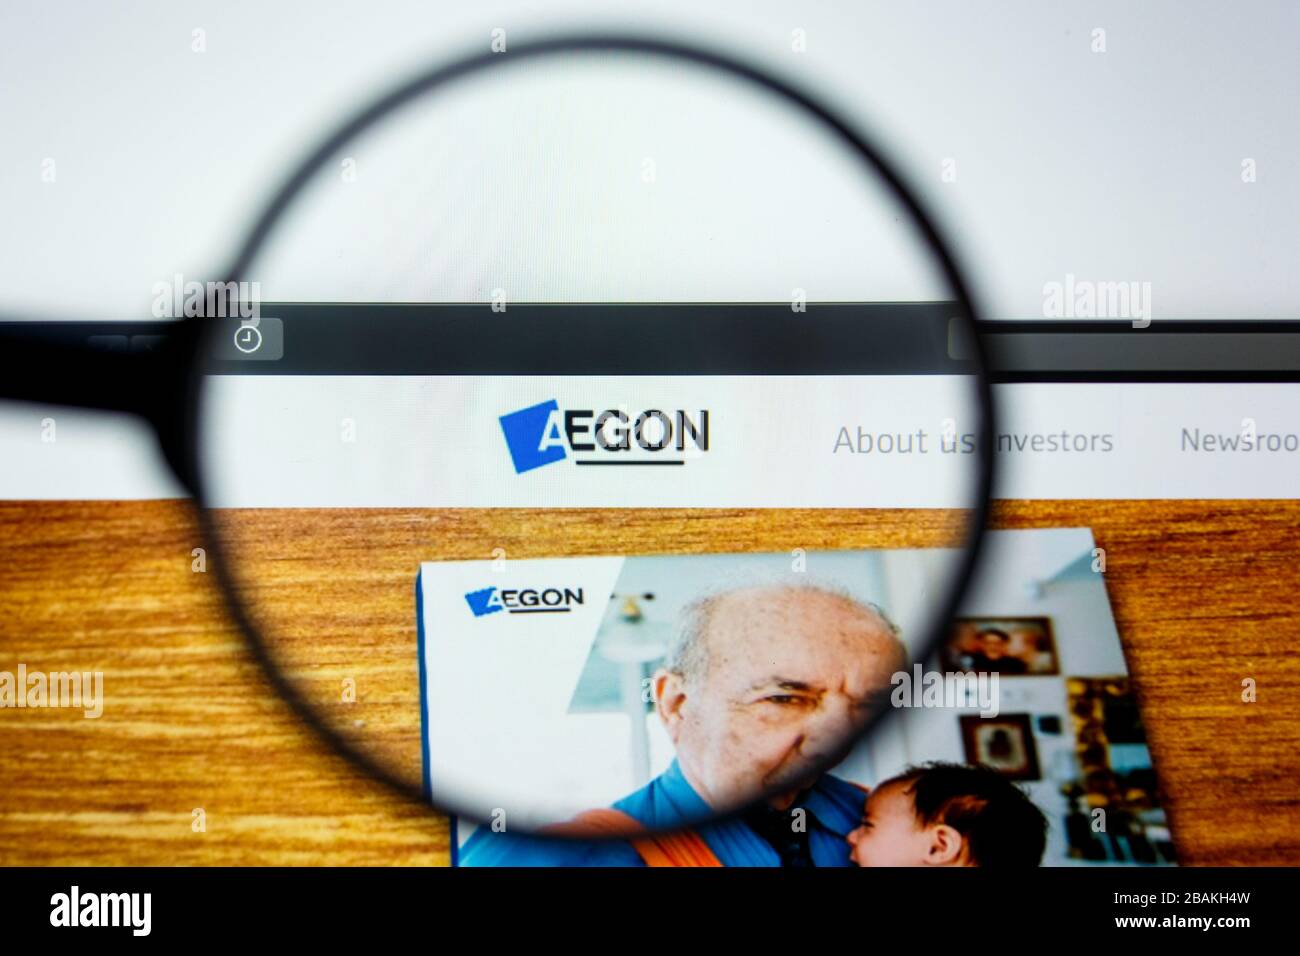 Los Angeles, California, USA - 12 June 2019: Illustrative Editorial of Aegon website homepage. Aegon logo visible on display screen Stock Photo